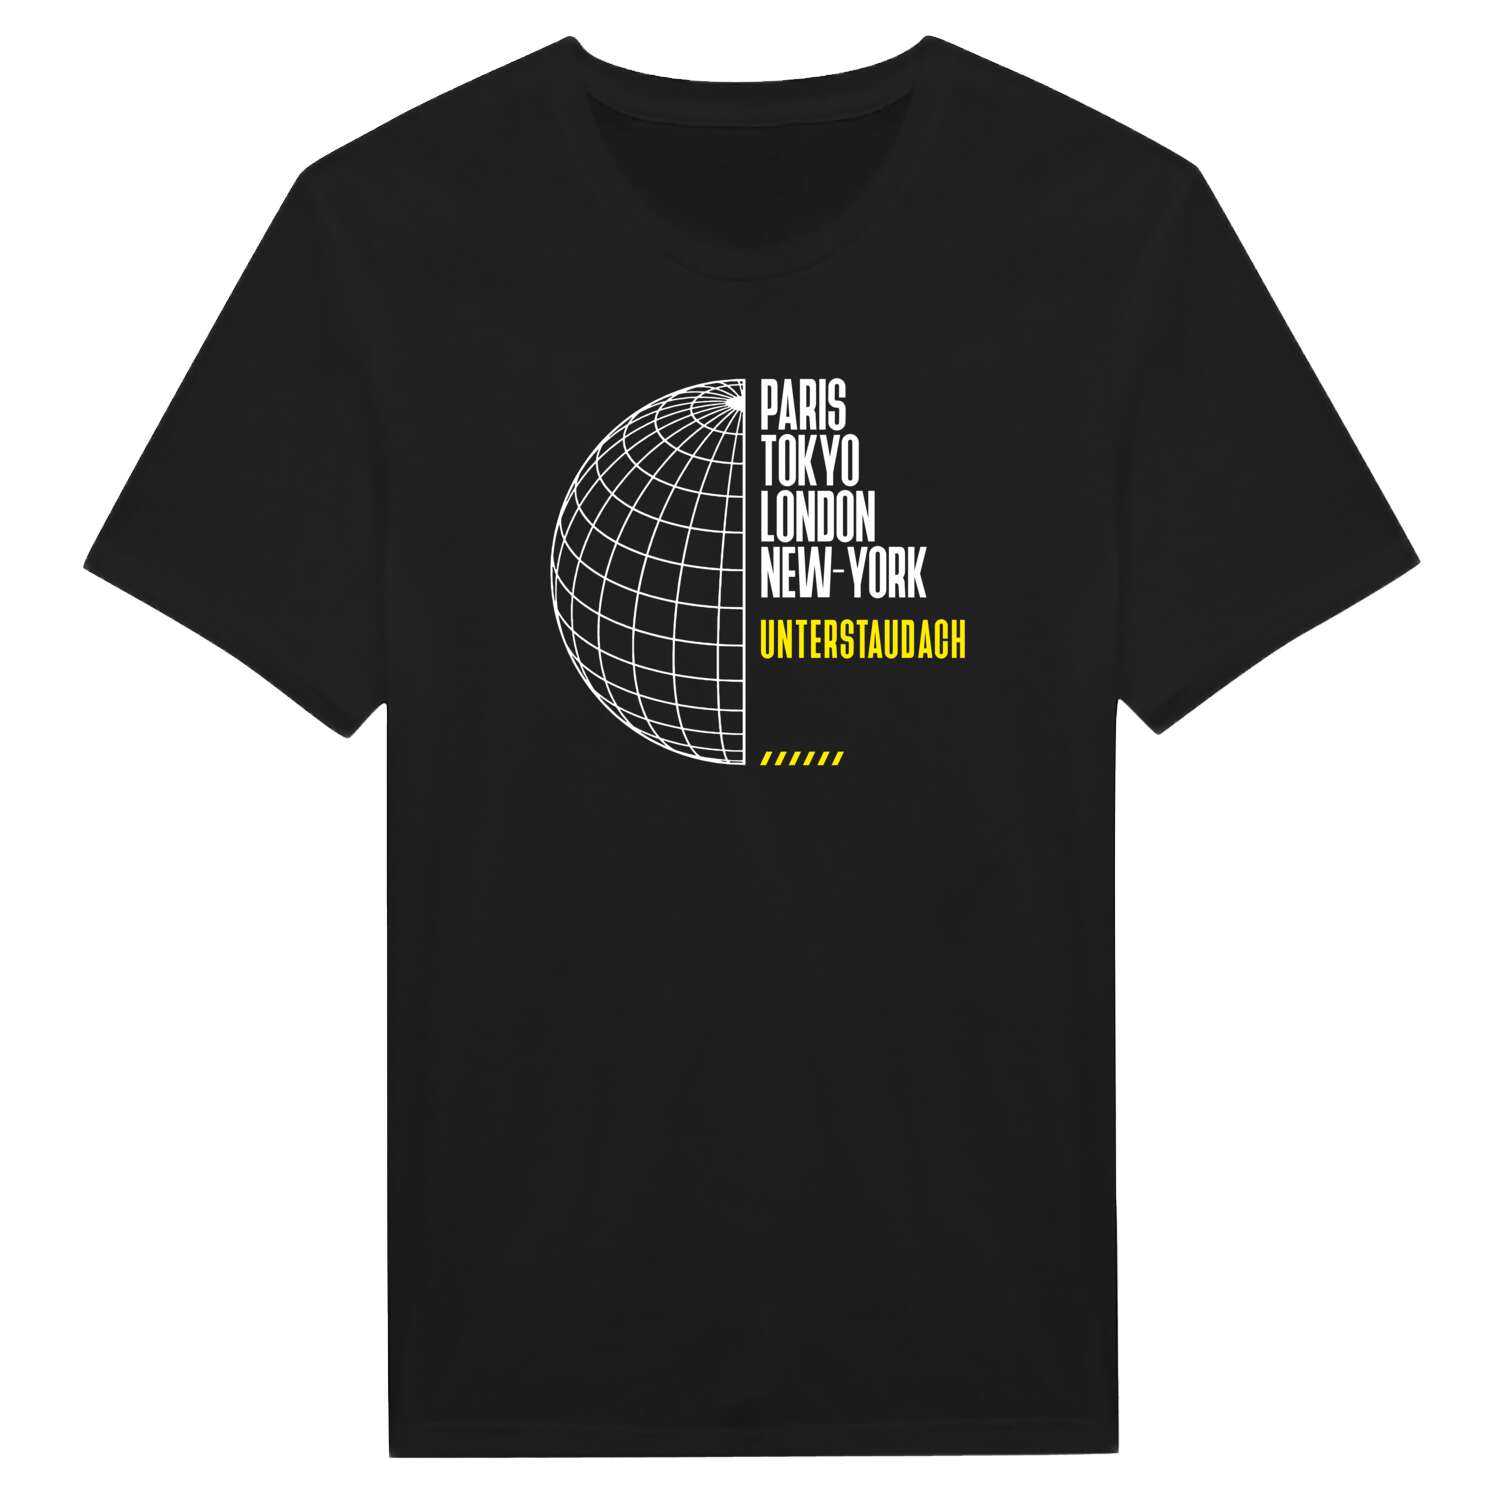 Unterstaudach T-Shirt »Paris Tokyo London«